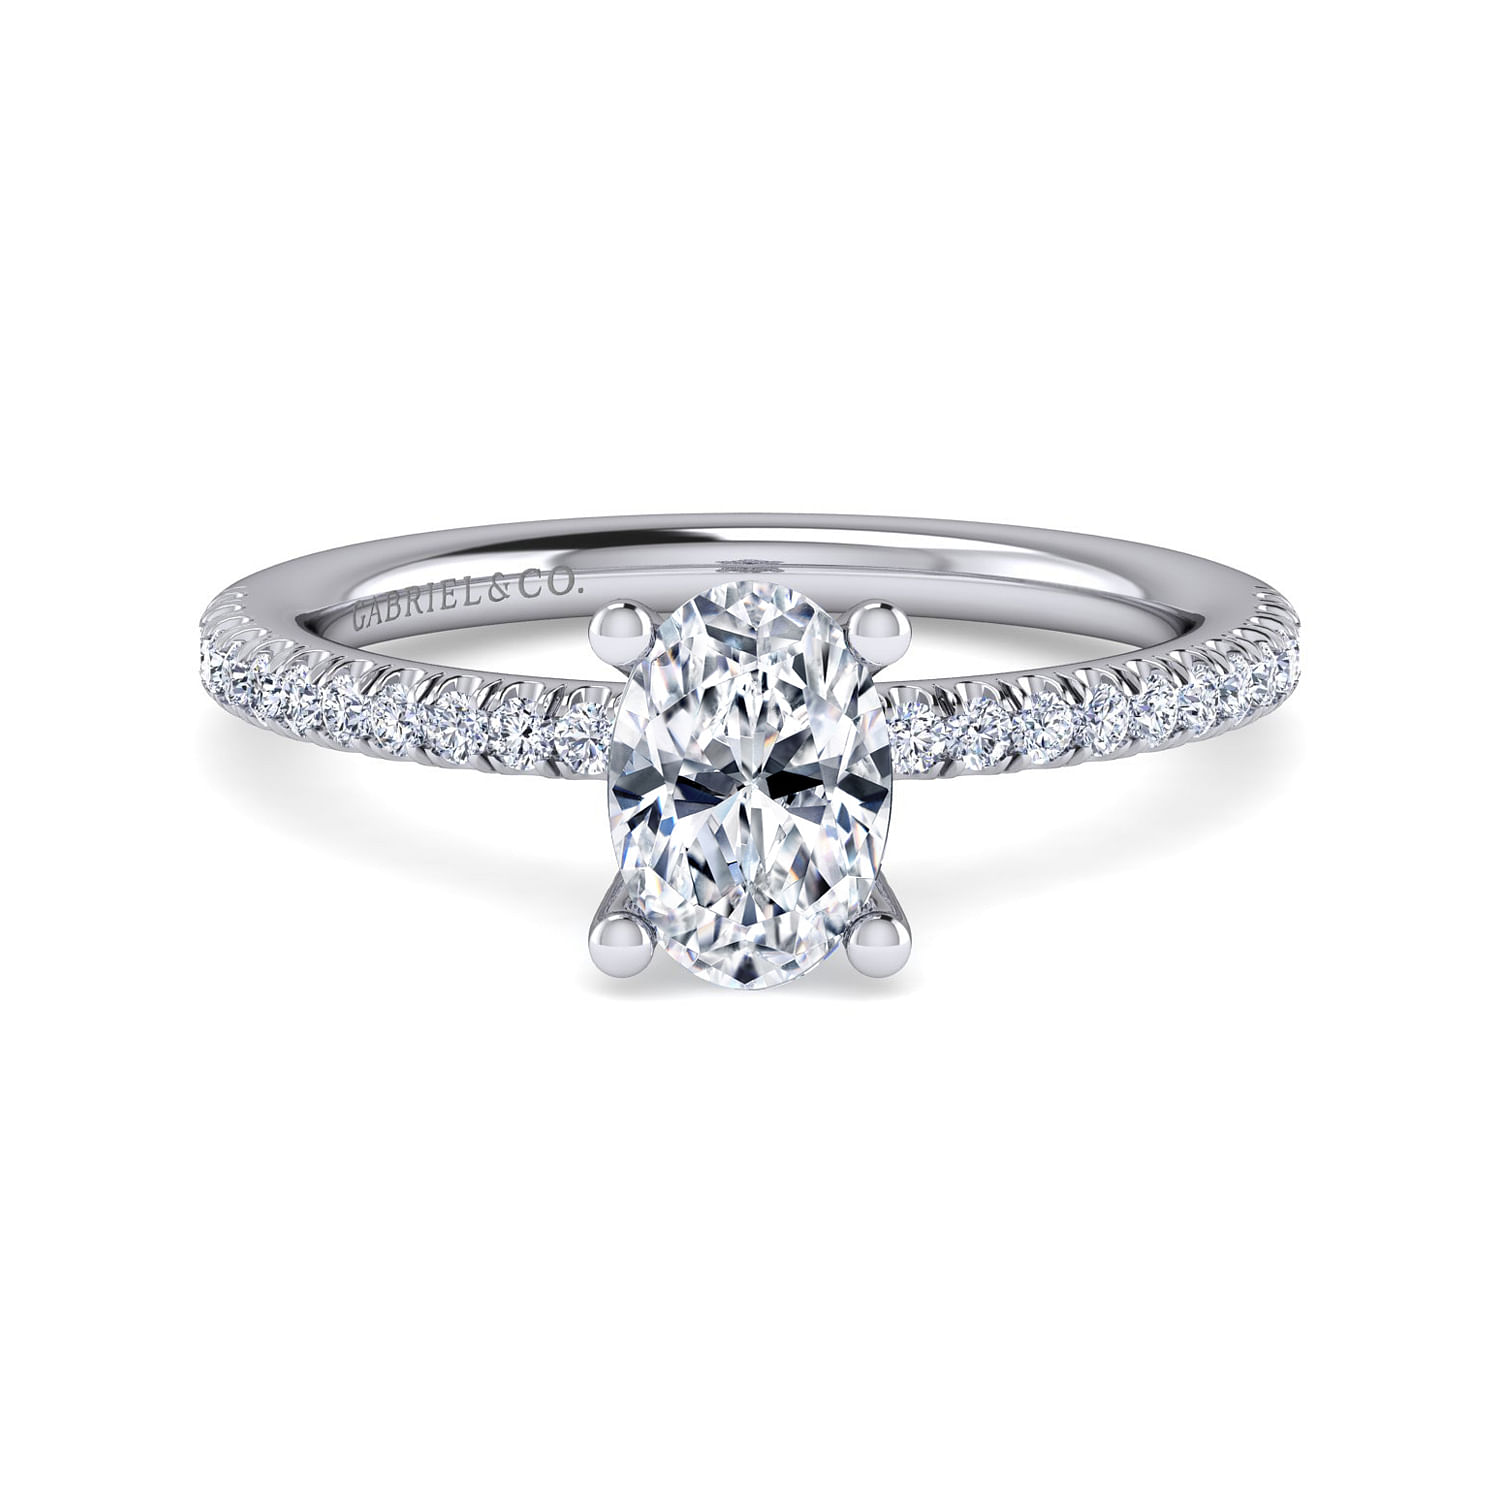 Serenity - 14K White Gold Oval Diamond Engagement Ring